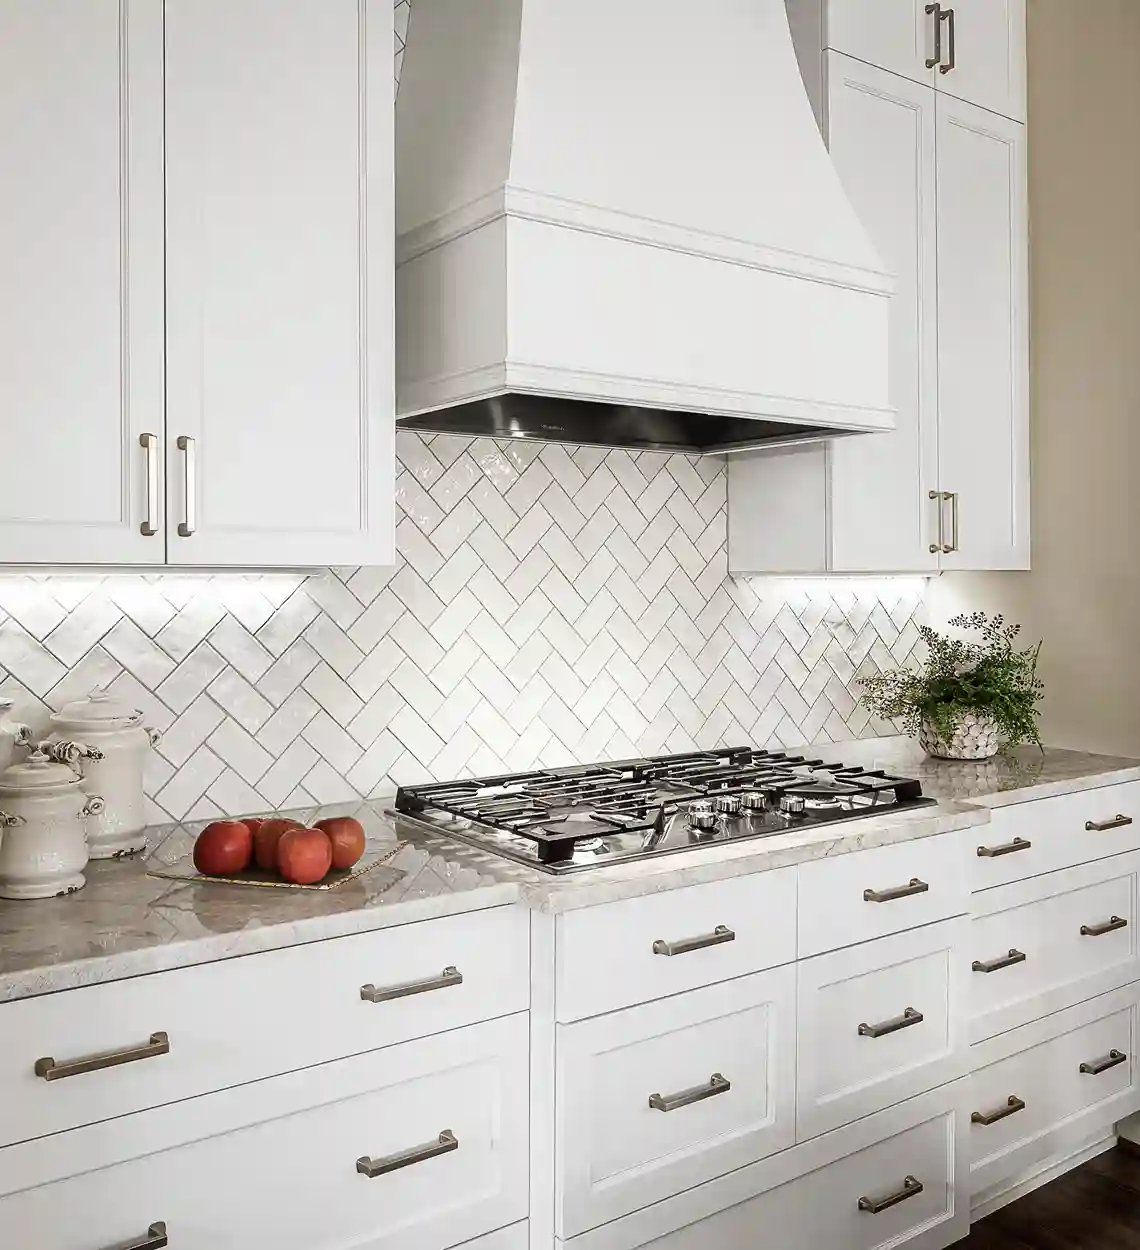 Elegant white kitchen with herringbone backsplash and stainless steel gas stove.